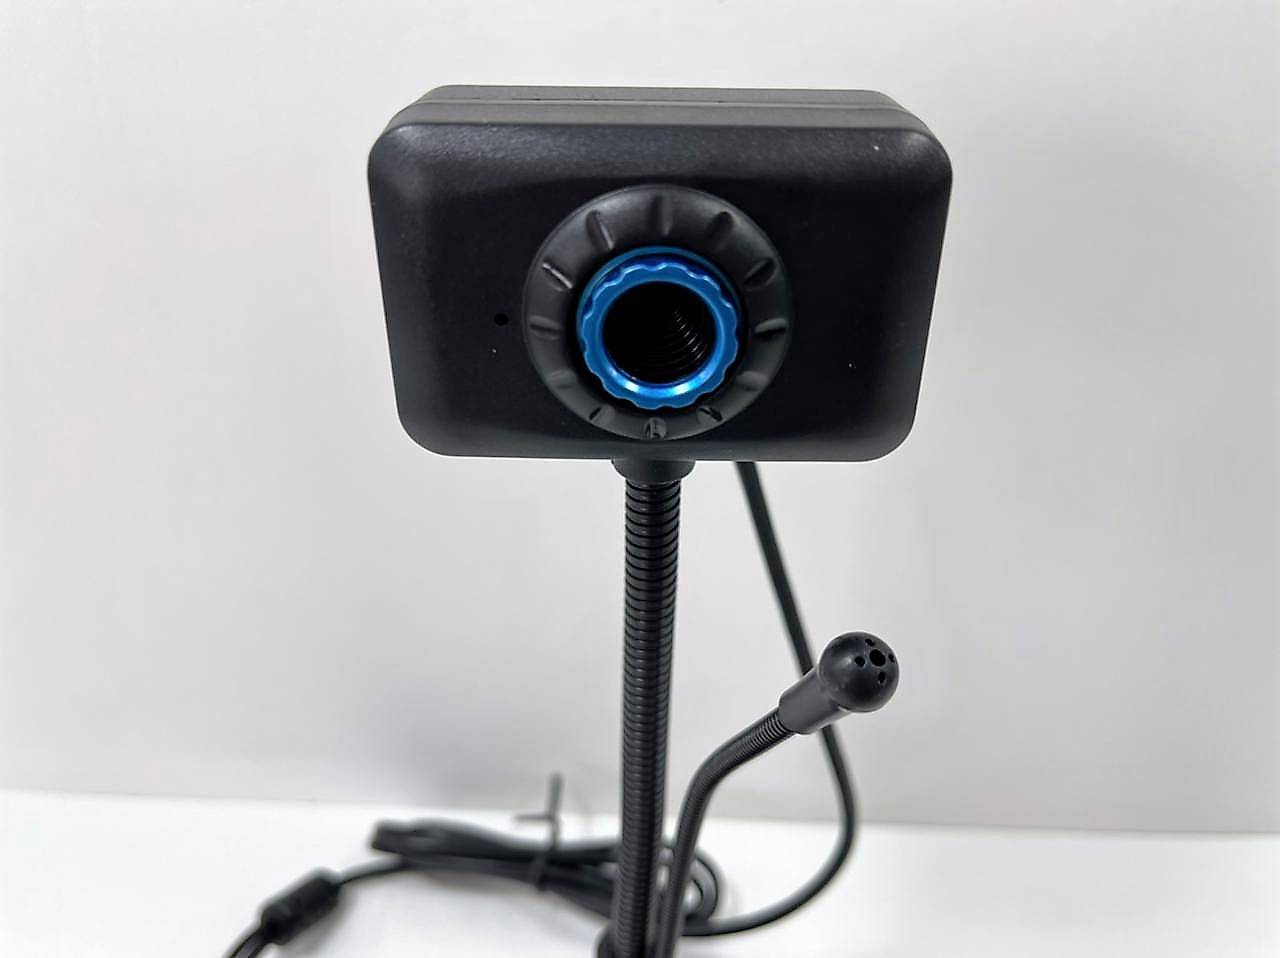 camara-web-usb-con-pedestal-microfono-480p-idkmanager1-2.jpeg